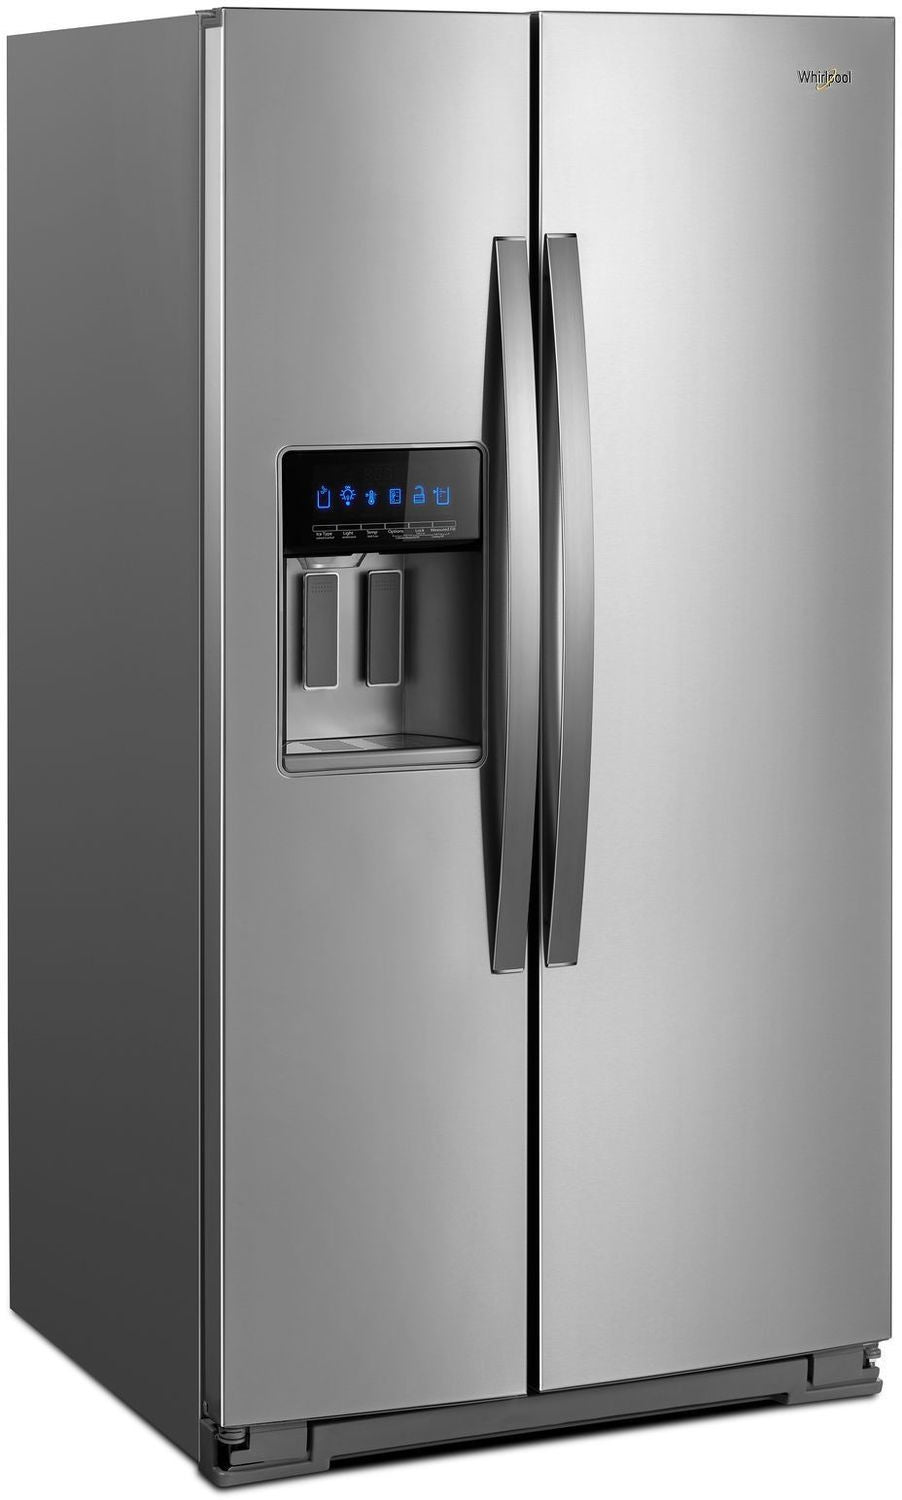 Whirlpool Stainless Steel Side-by-Side Refrigerator (28 Cu. Ft.) - WRS588FIHZ